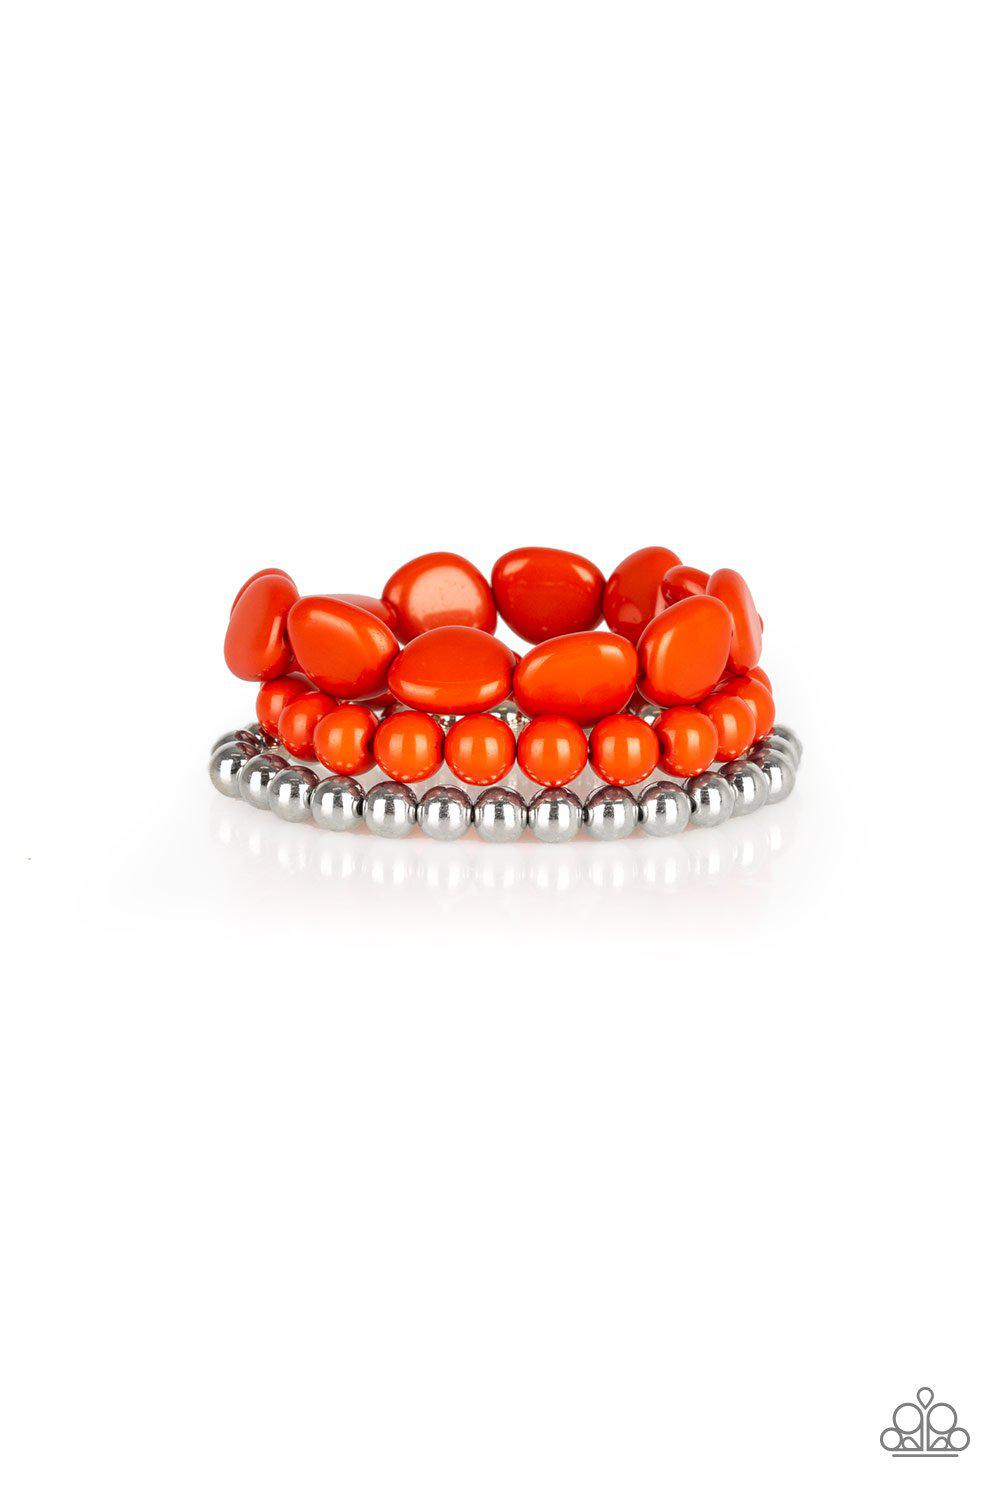 Color Venture Silver and Orange Bracelet Set - Paparazzi Accessories-CarasShop.com - $5 Jewelry by Cara Jewels